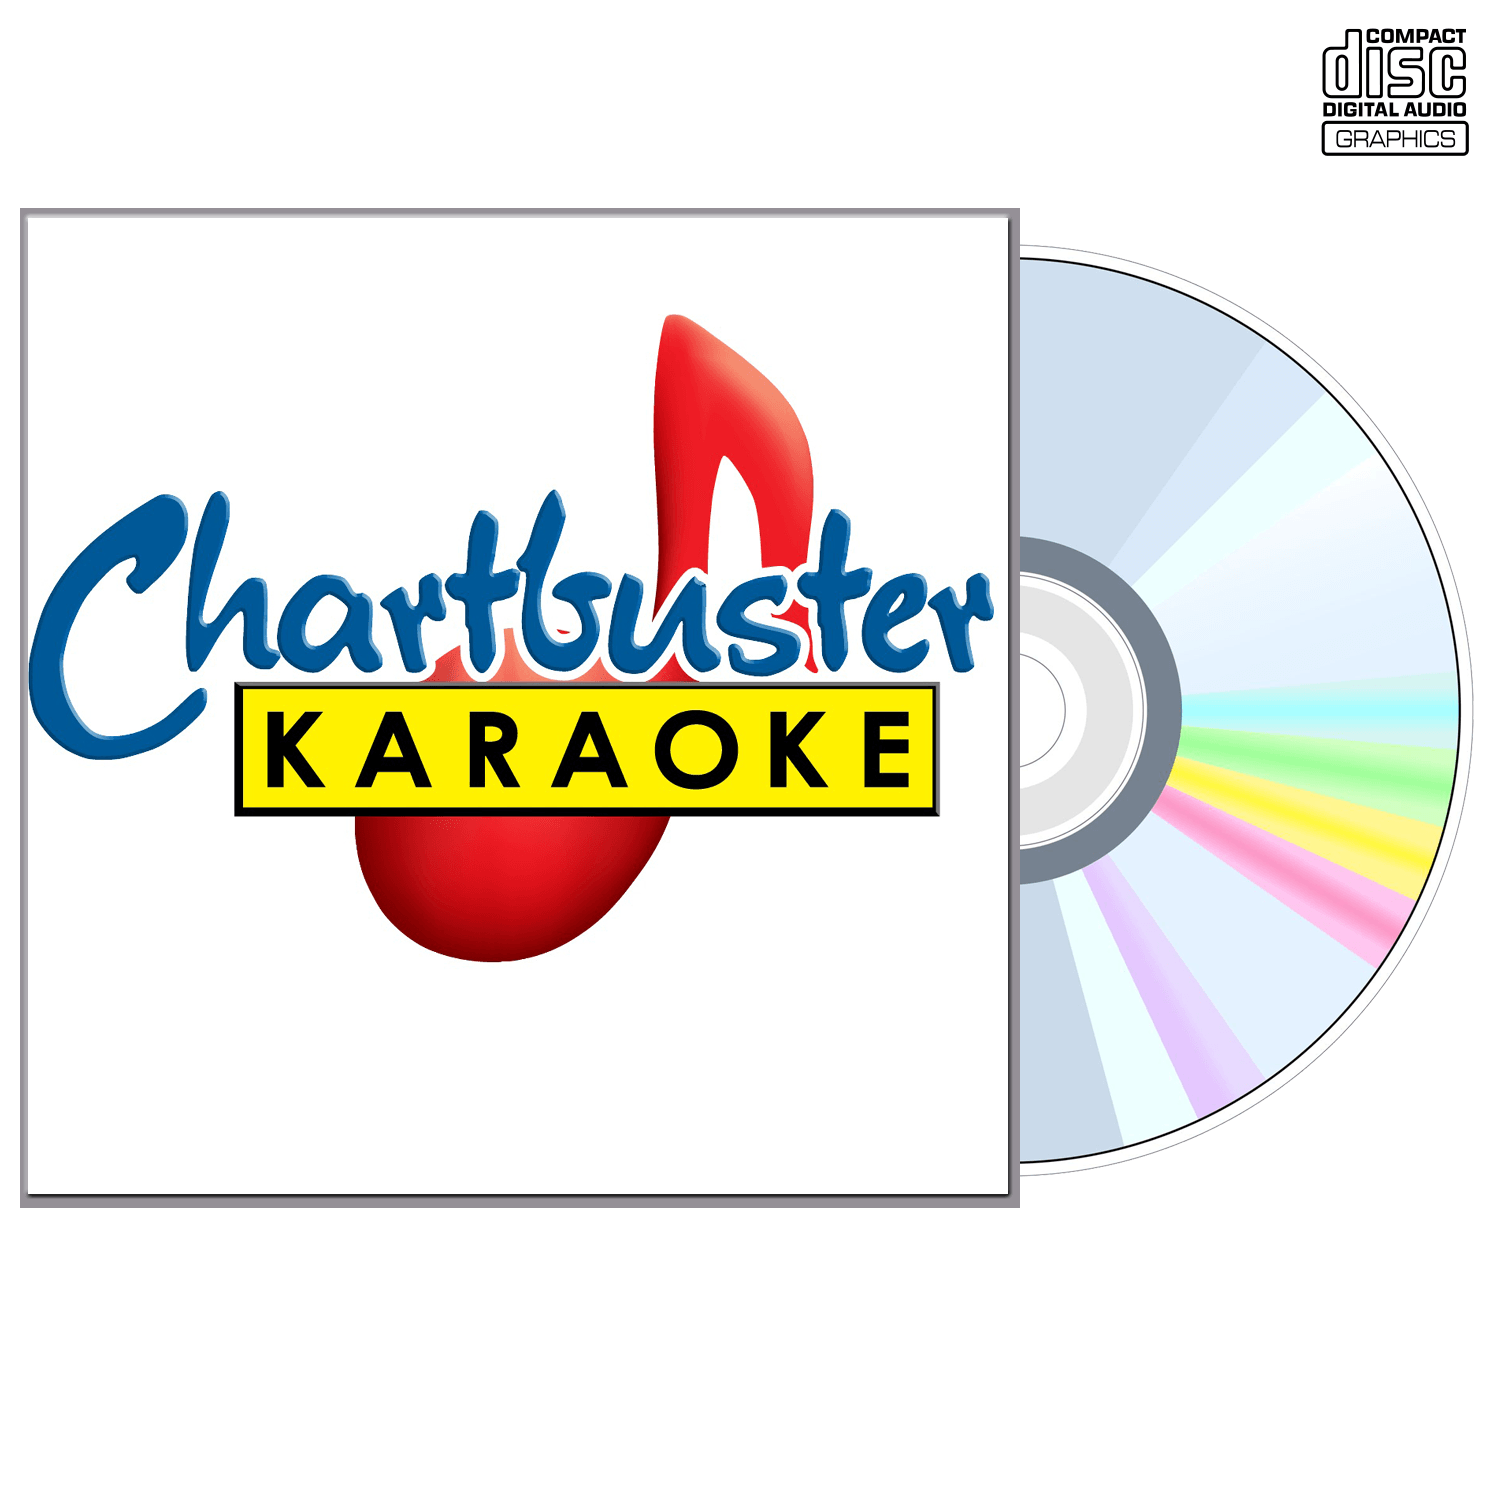 Trisha Yearwood Vol 3 - CD+G - Chartbuster Karaoke - Karaoke Home Entertainment